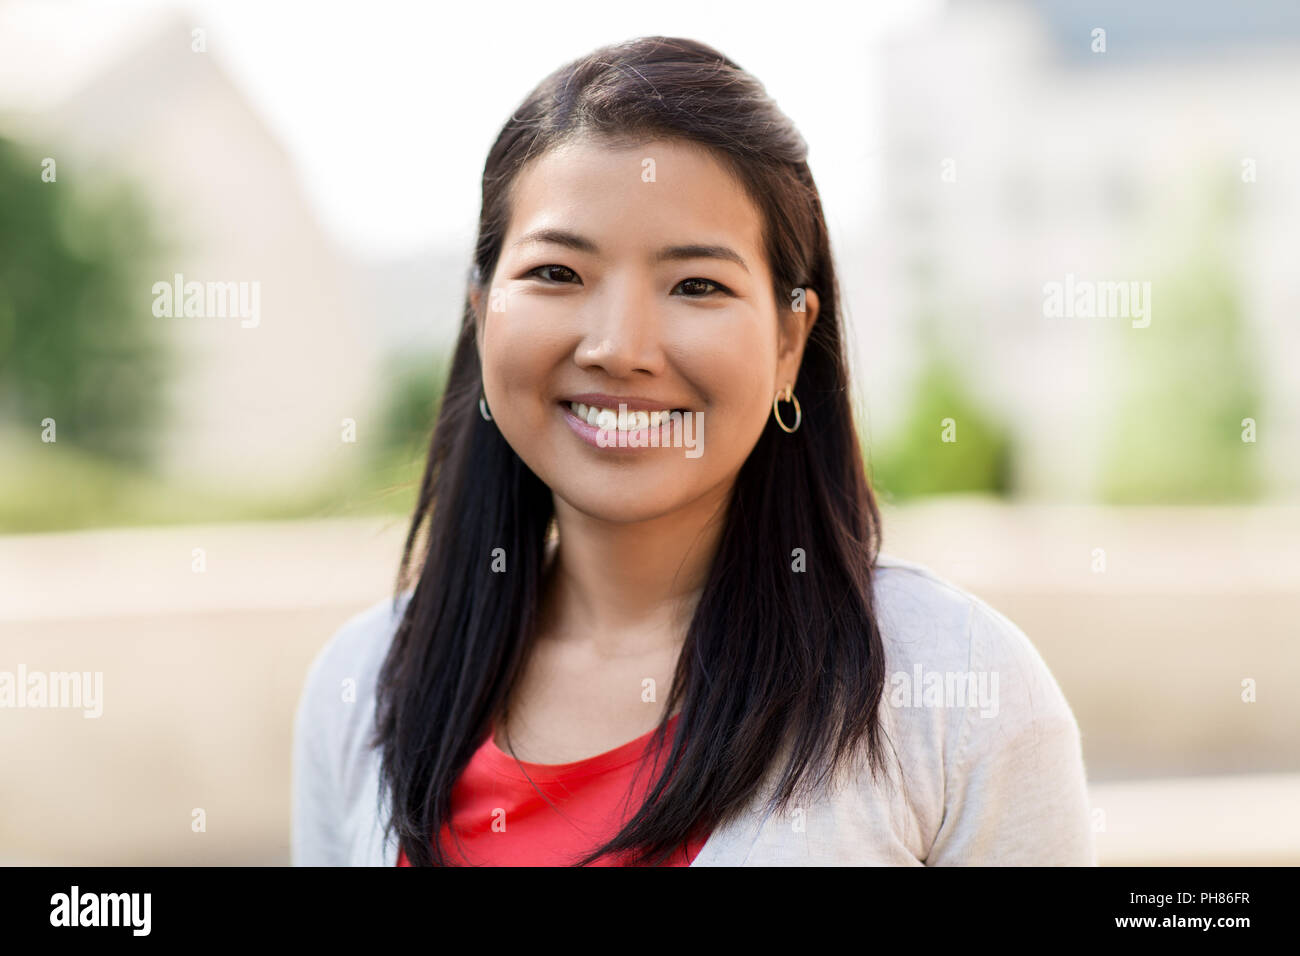 Portrait of smiling asian woman outdoors Banque D'Images